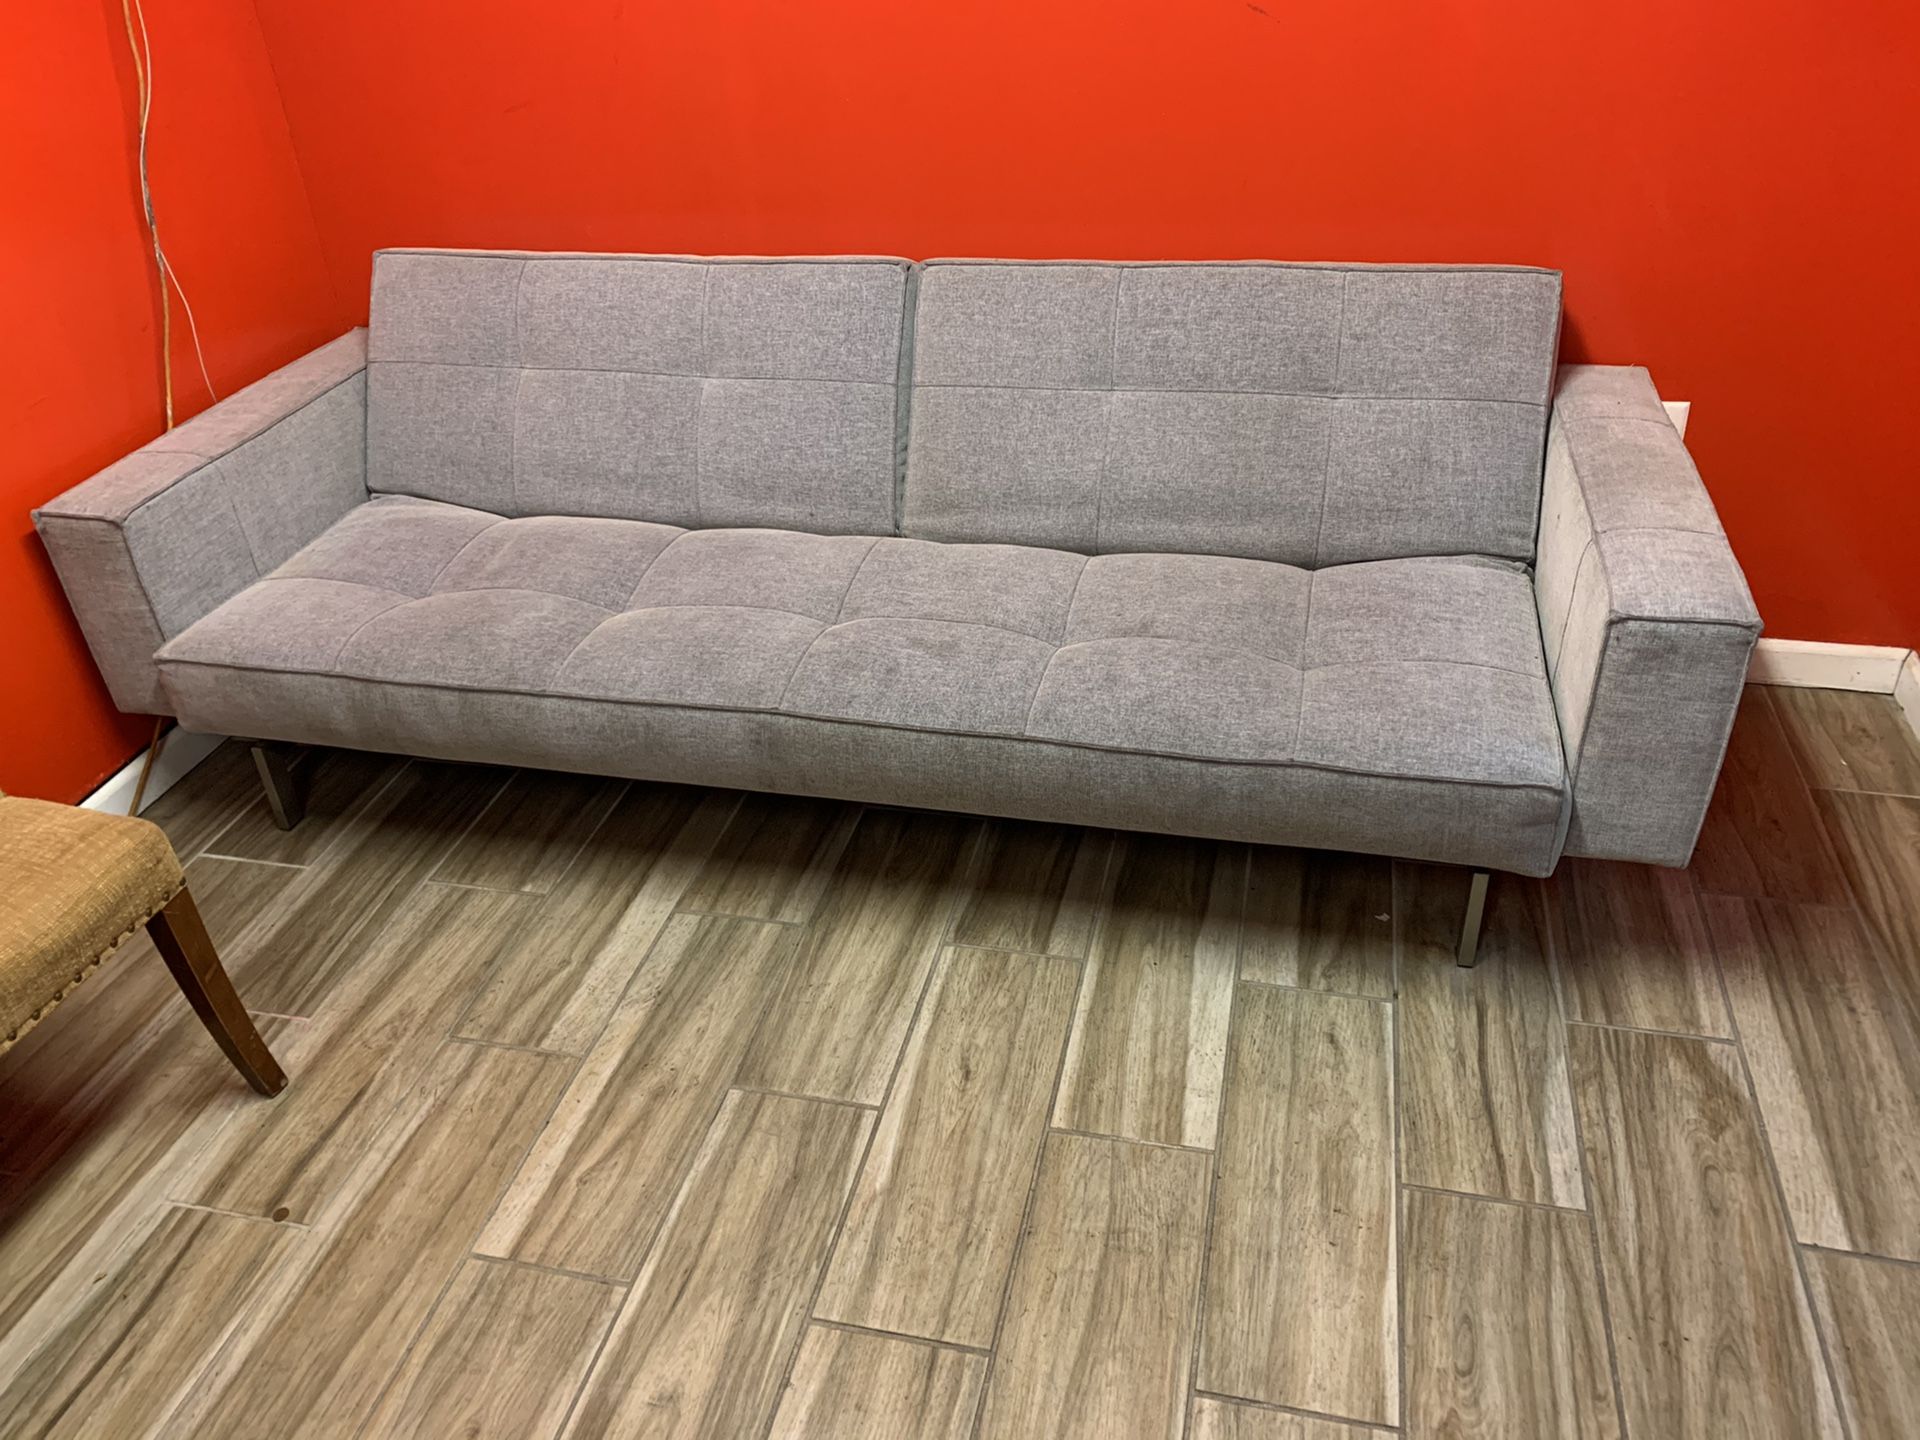 Sofa bed $80